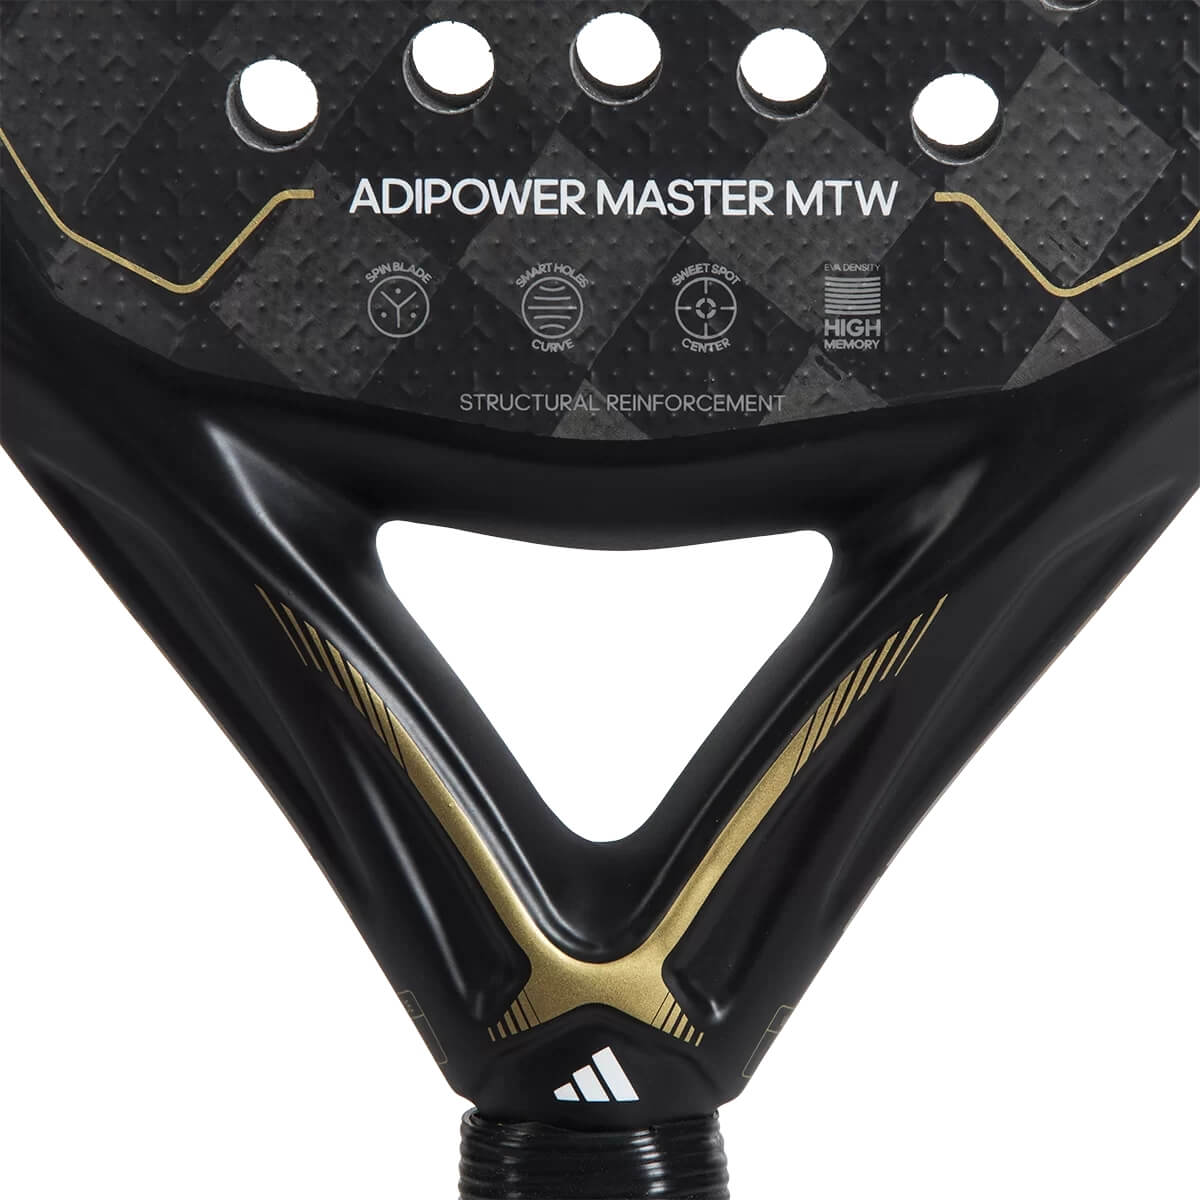 Adidas Adipower Multiweight Masters LTD padel racket close-up